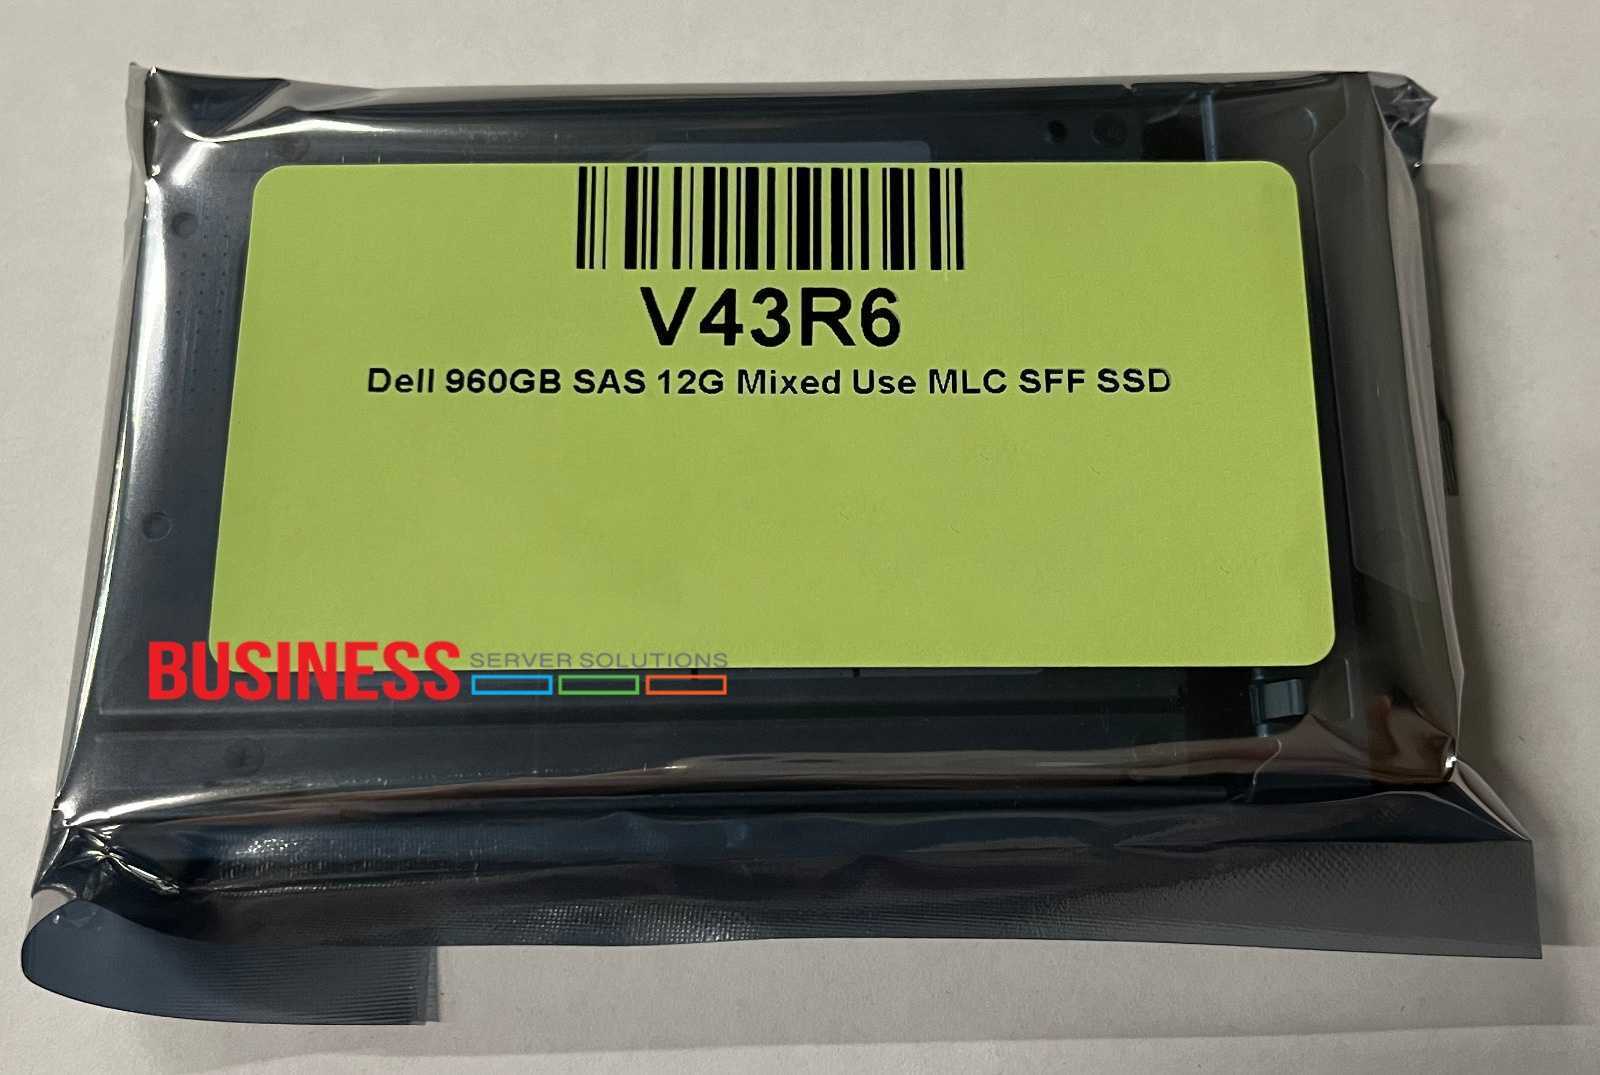 NEW Dell 960GB SAS 12G Mixed Use MLC SFF SSD V43R6